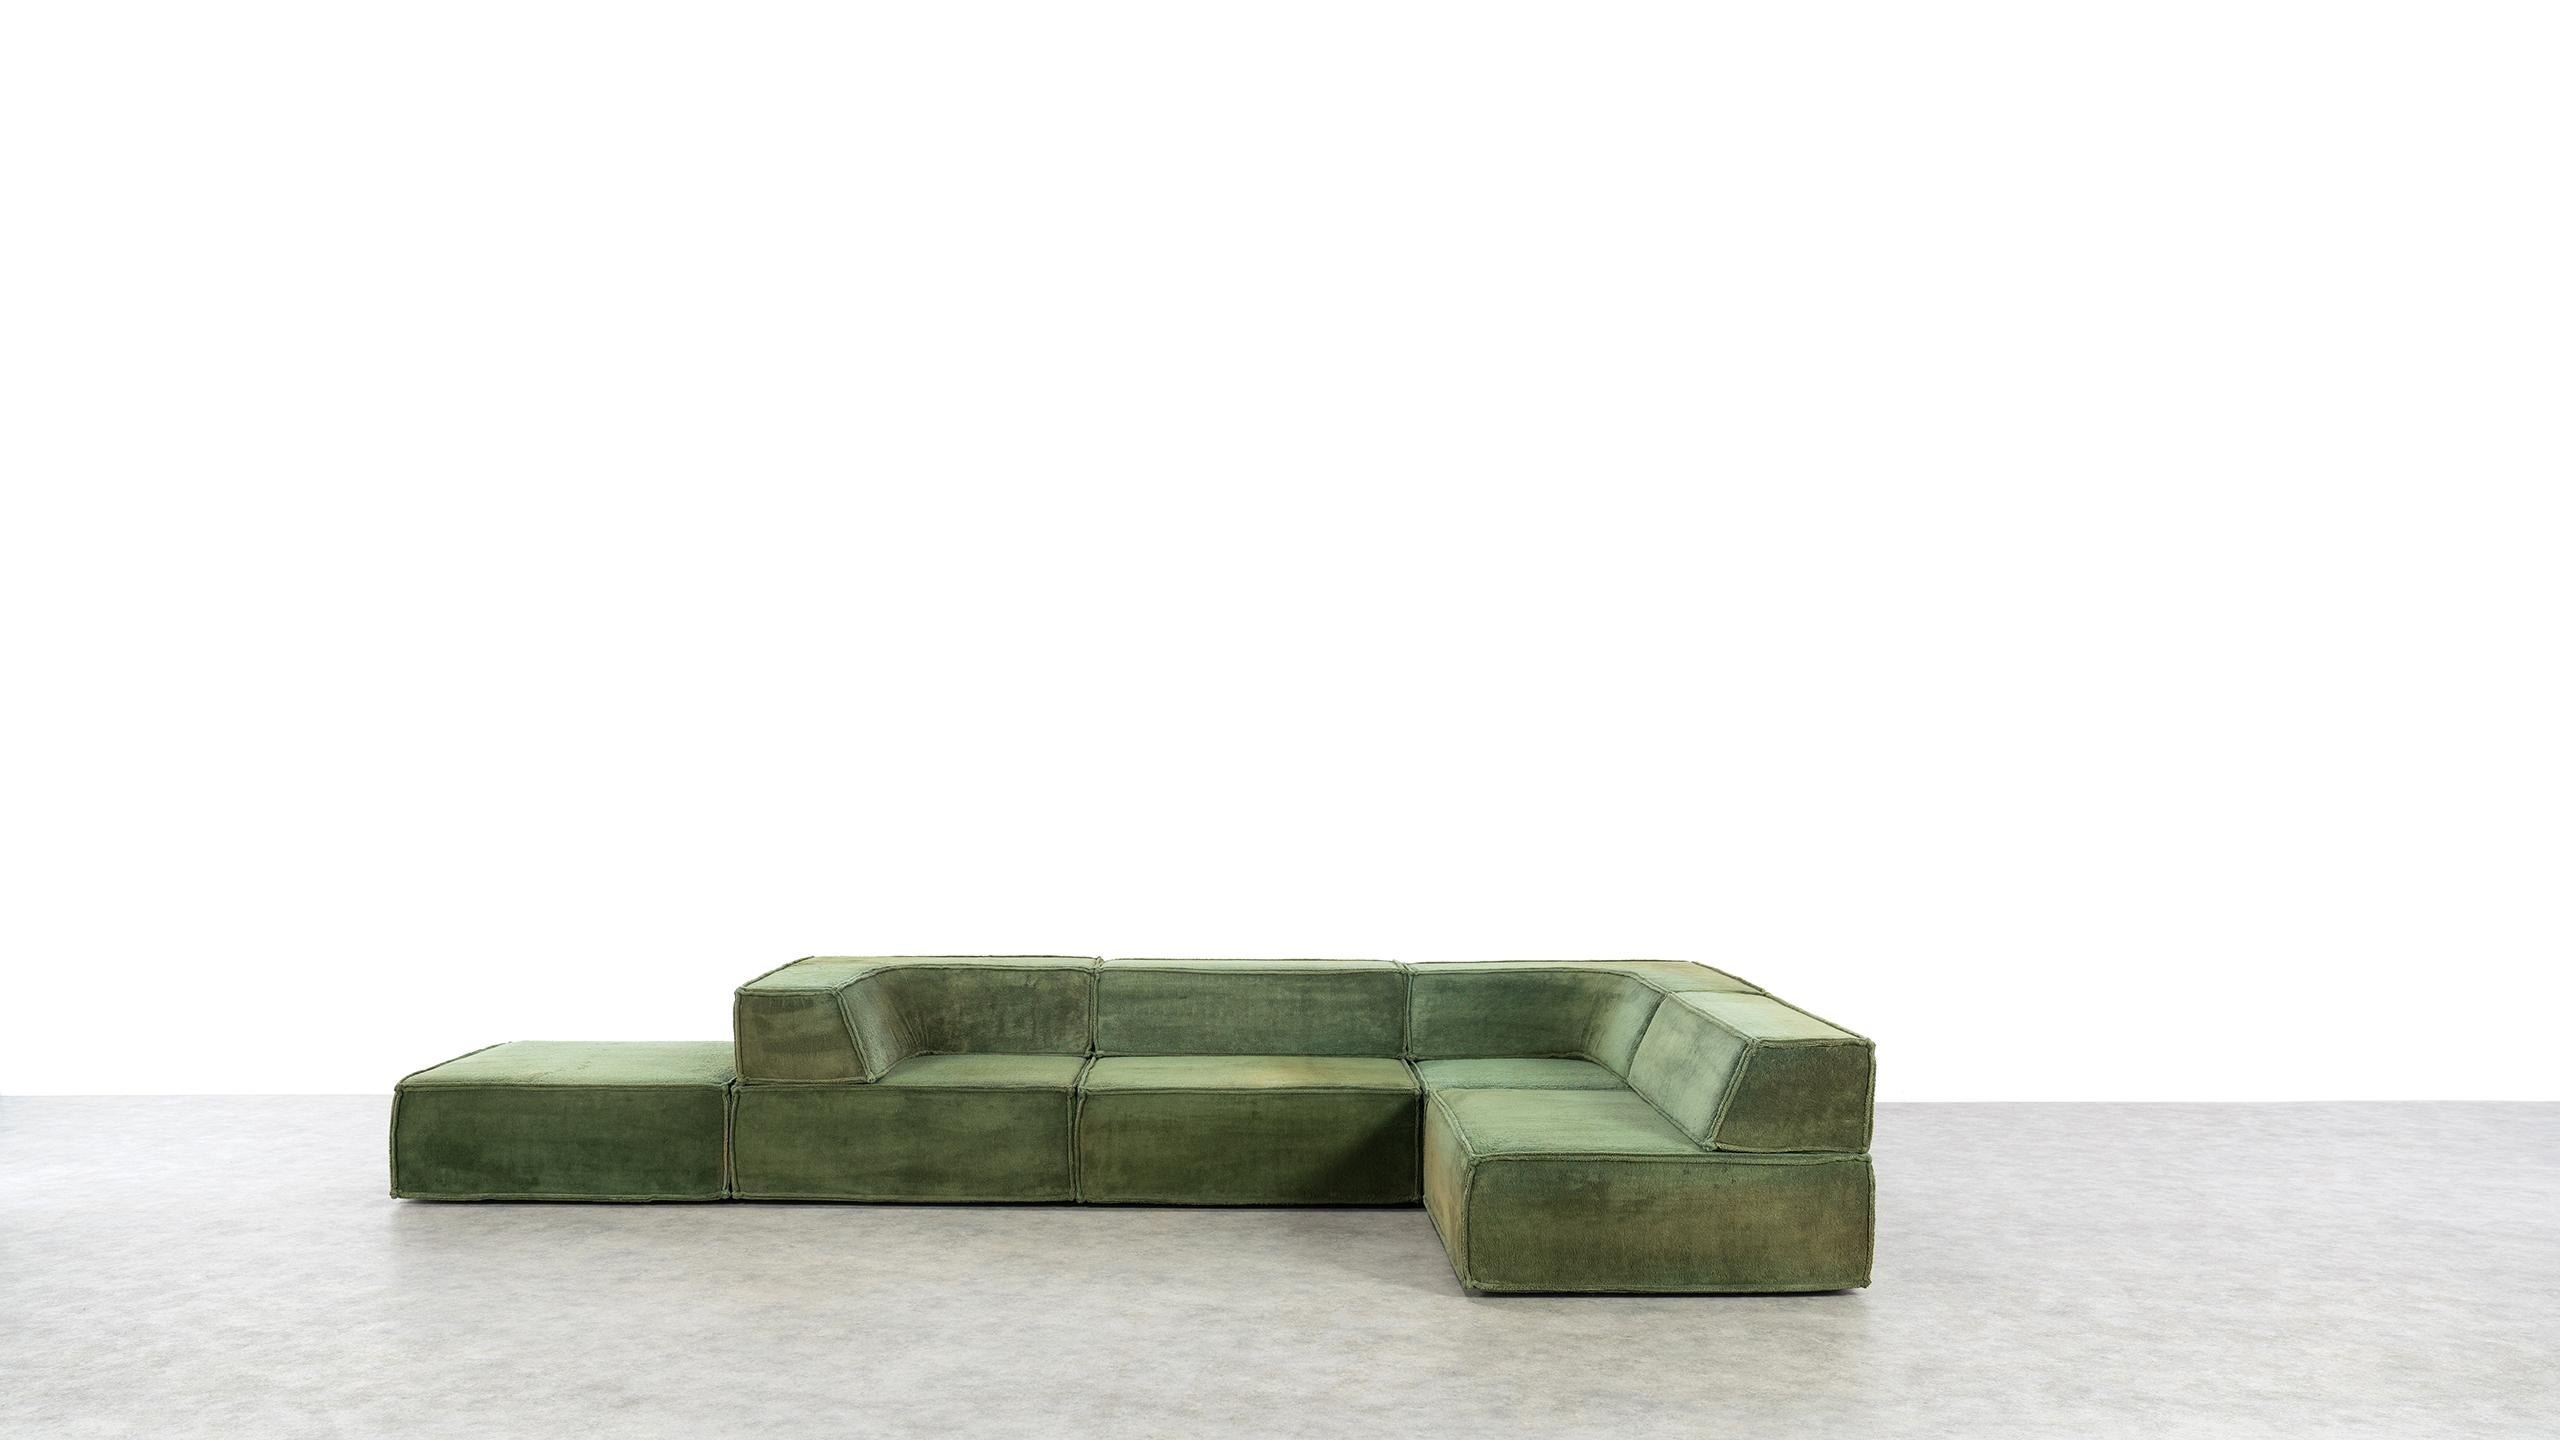 German COR Trio Modular Sofa, Giant Landscape in Green, 1972 by Team Form AG, Swiss